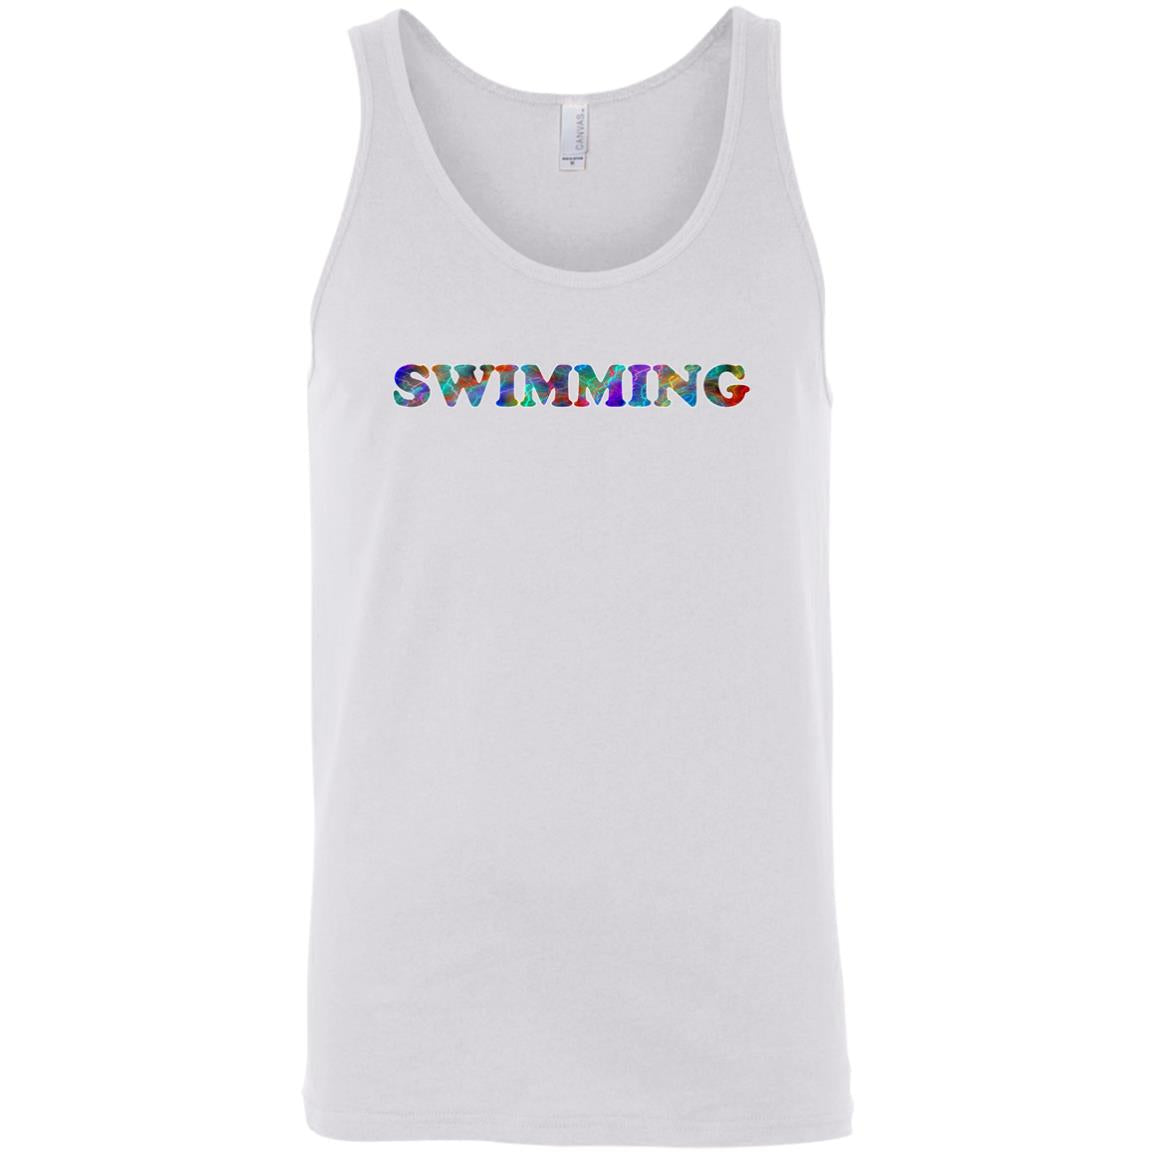 Swimming Sleeveless Unisex Tee